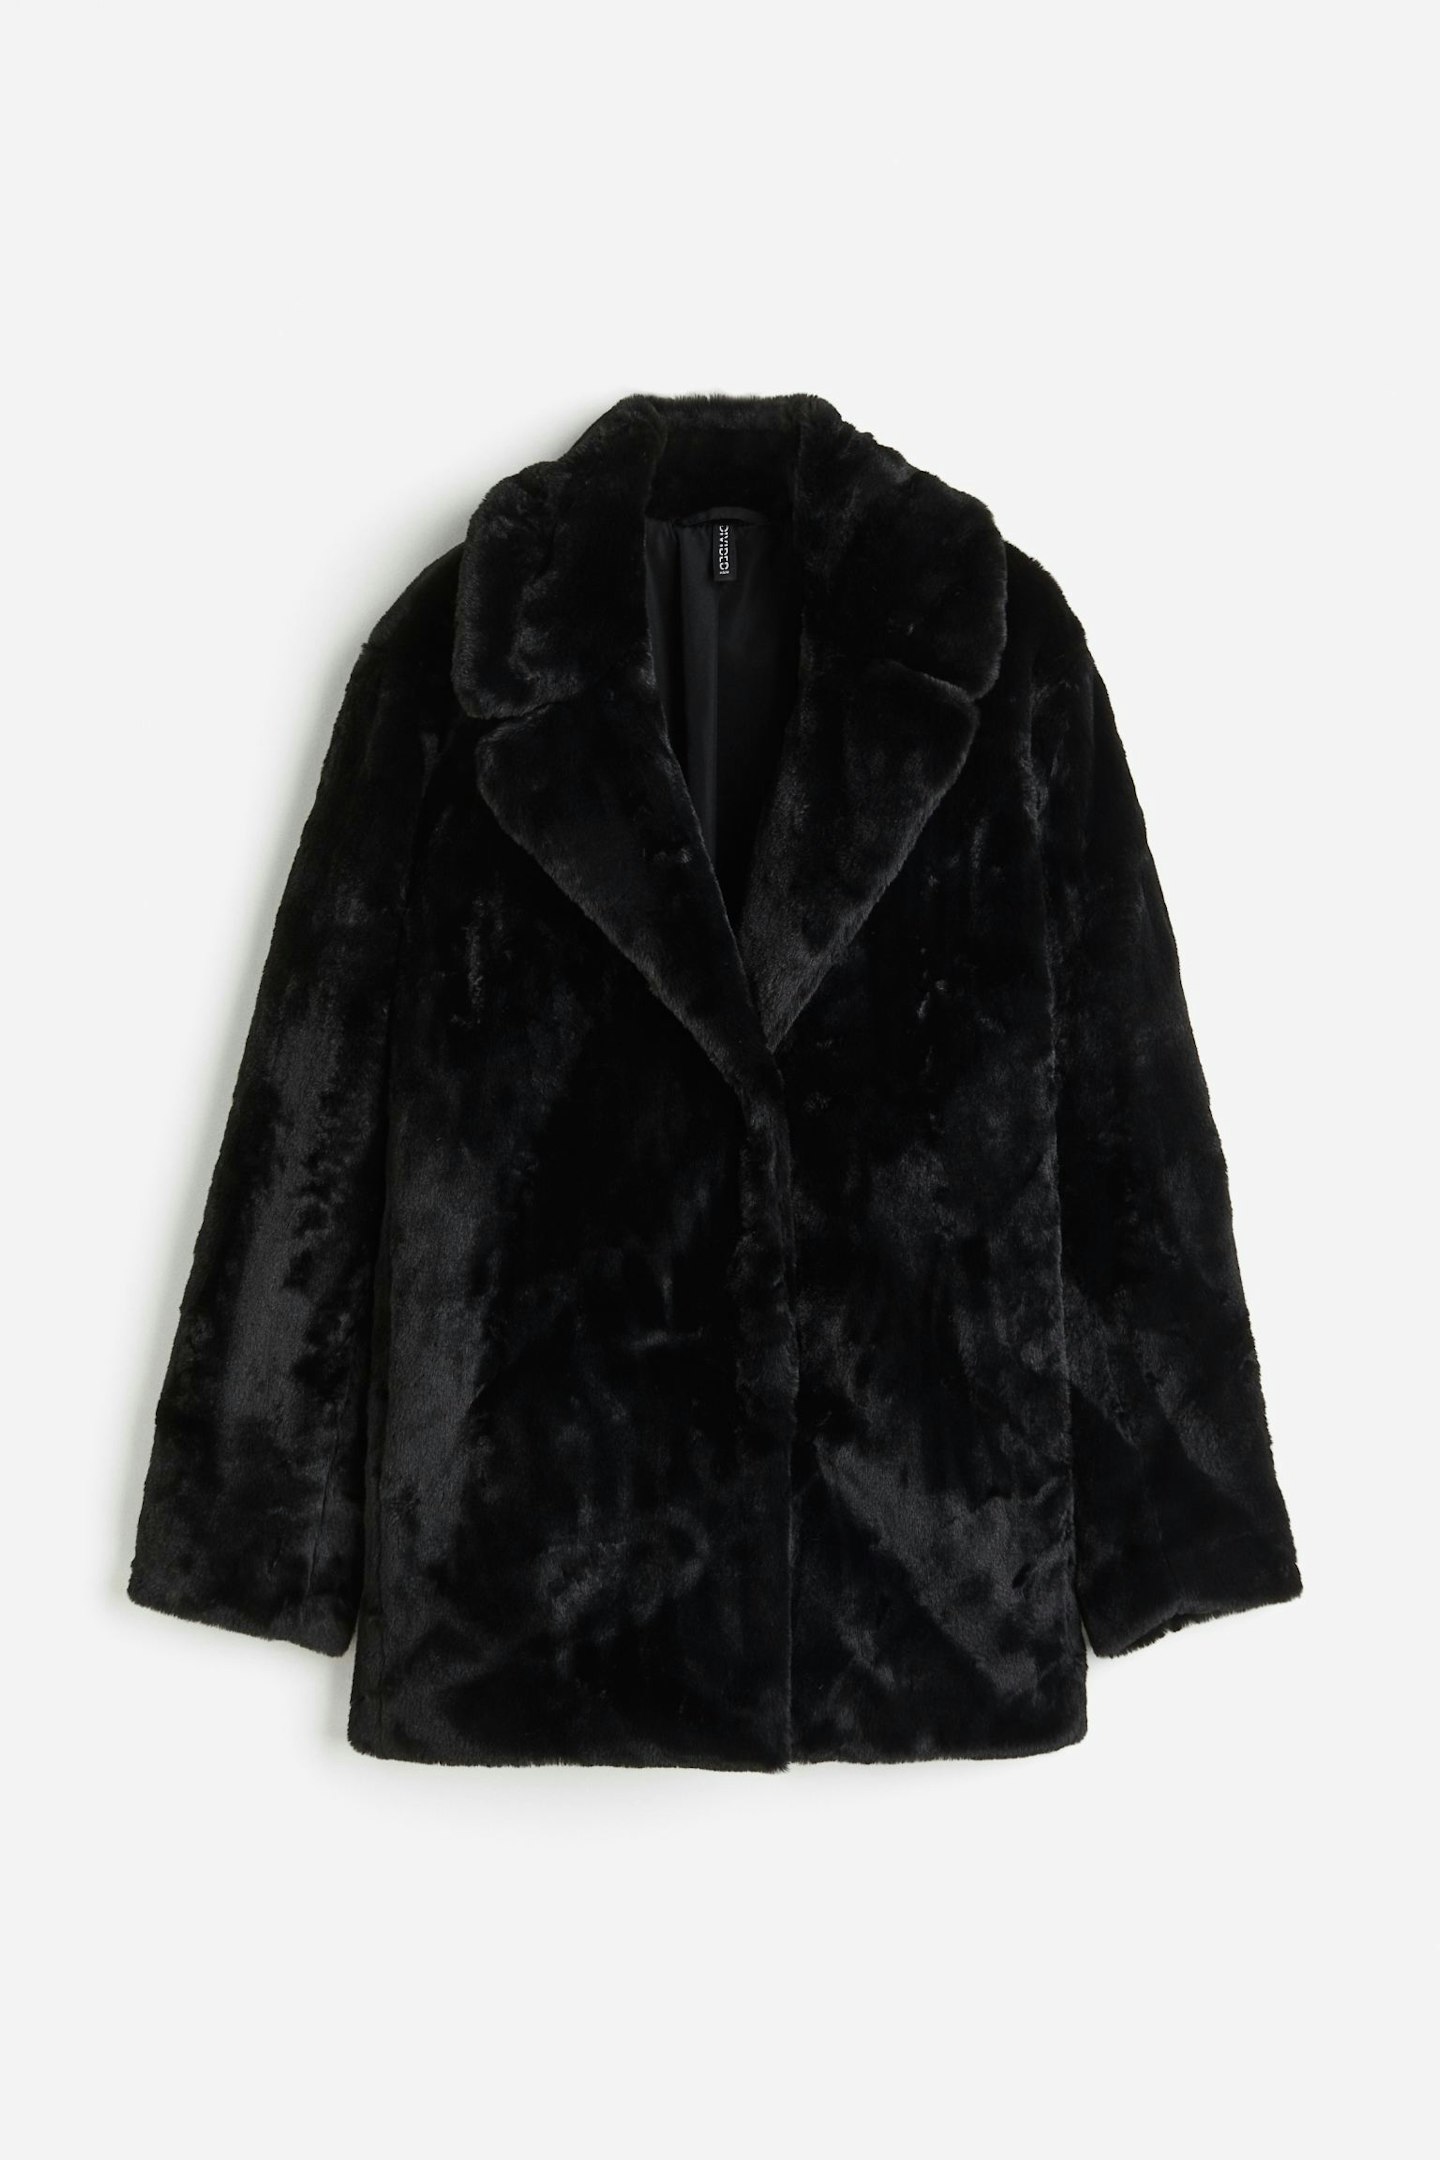 H&M faux fur jacket selena Gomez 